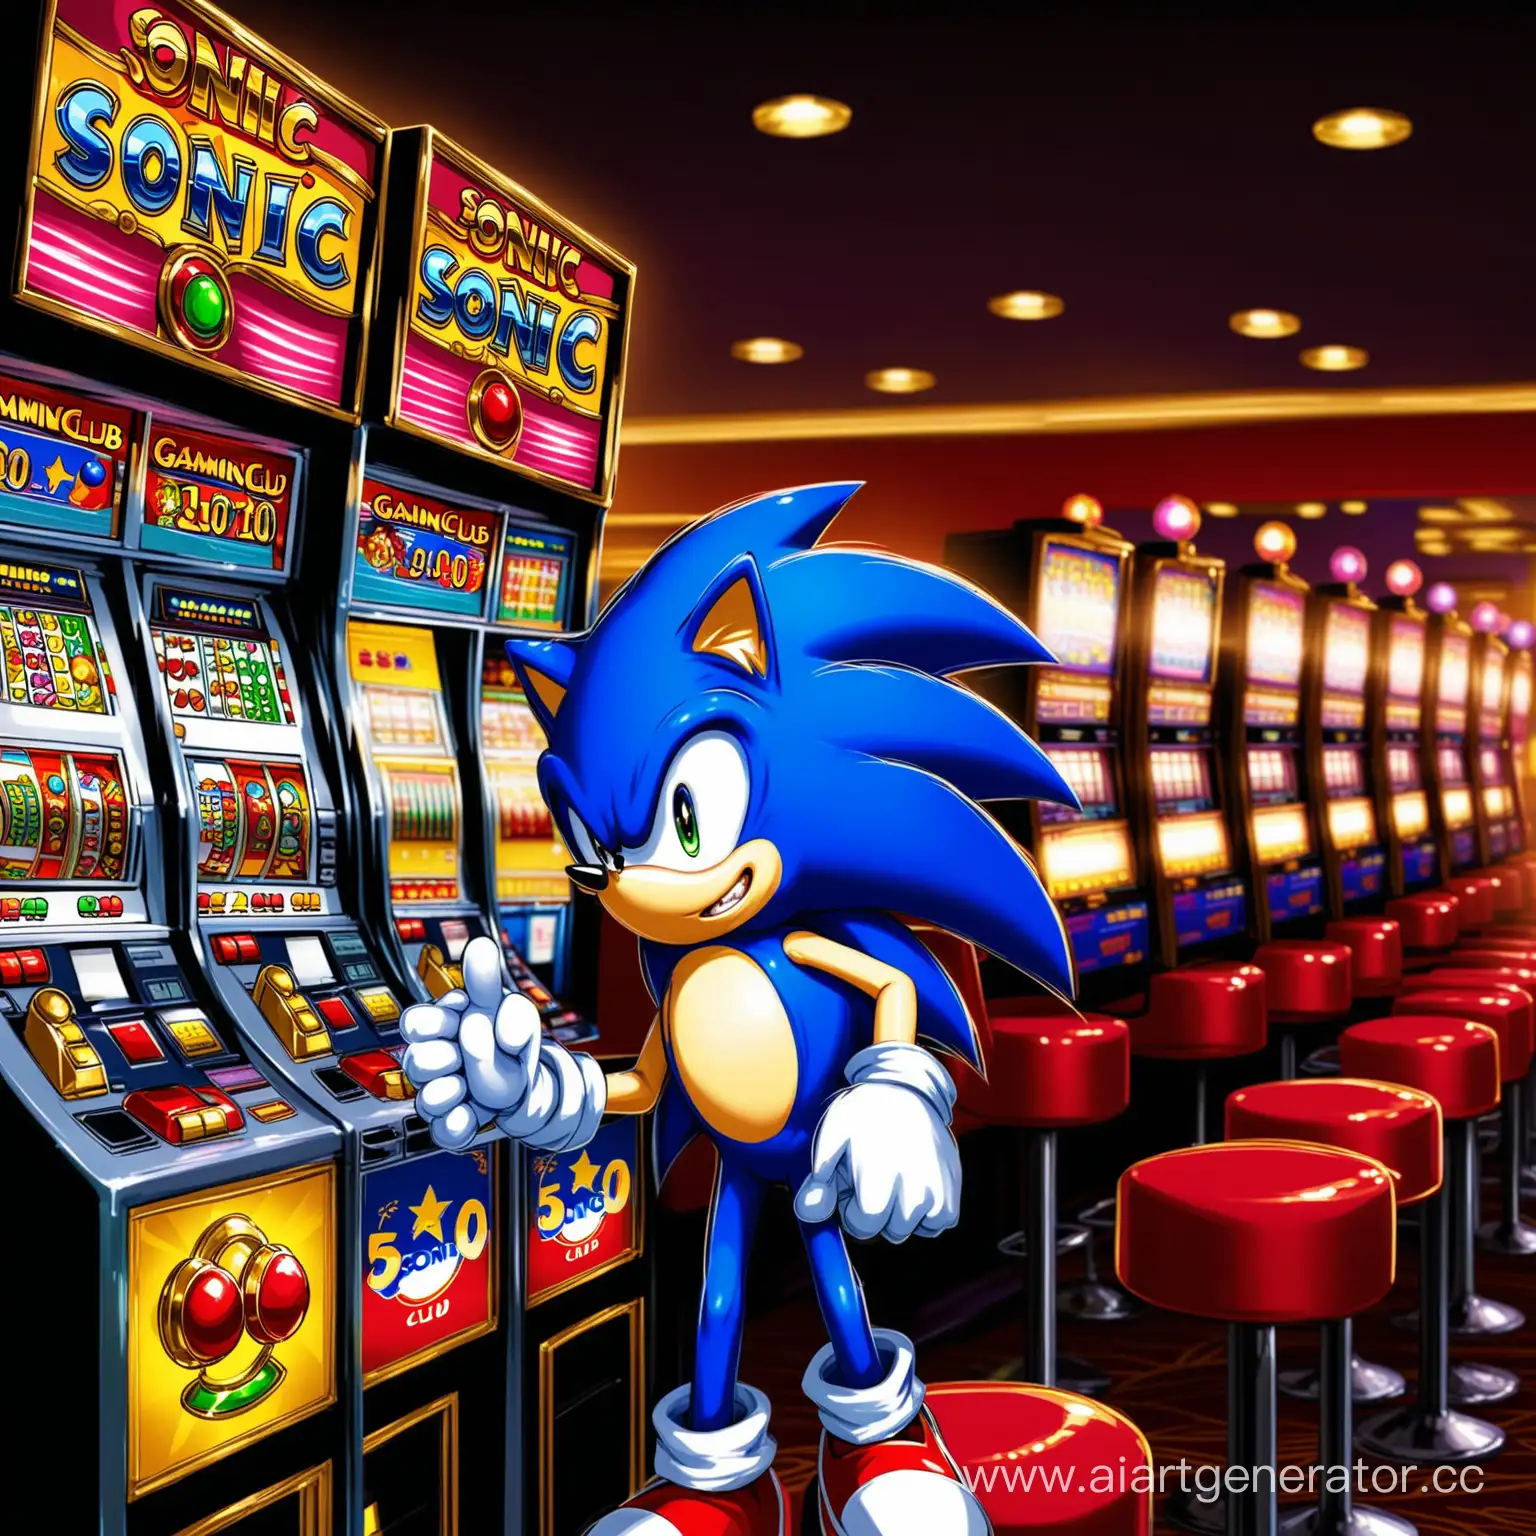 Sonic-Gaming-Club-Slot-Machine-Excitement